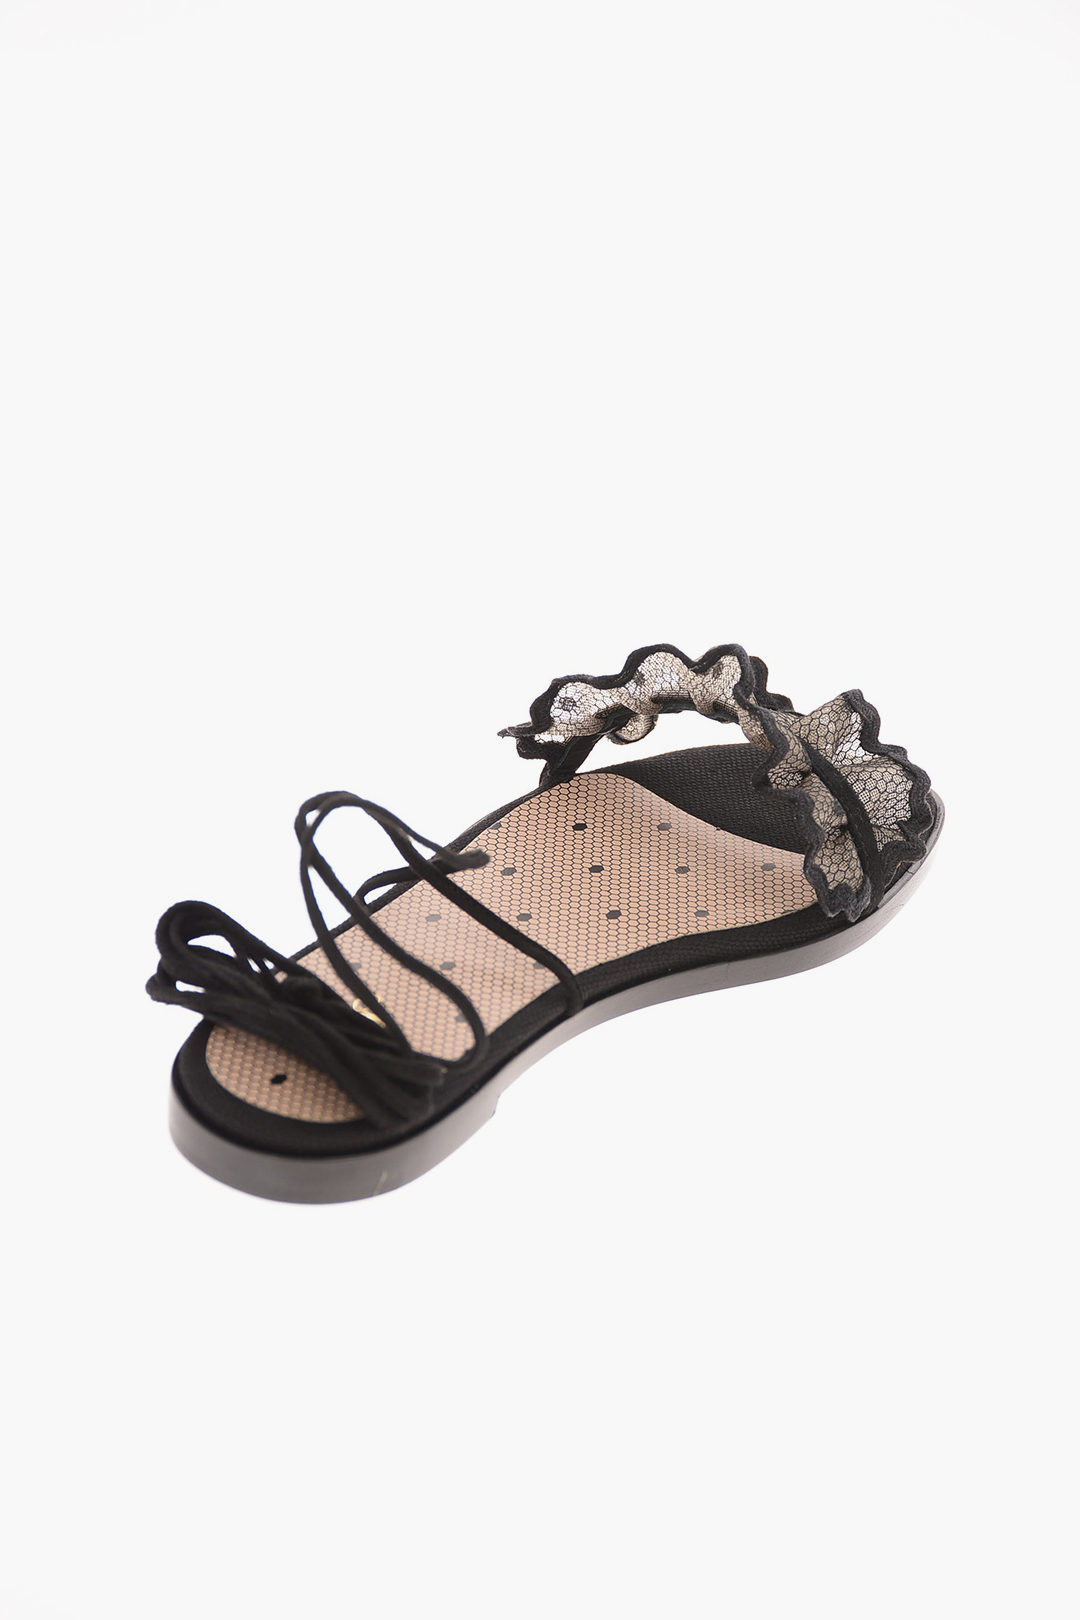 LacedUp Designer Shoes Spring 2016 Trend  Nordstrom  Valentino sandals  Black lace up shoes Women shoes